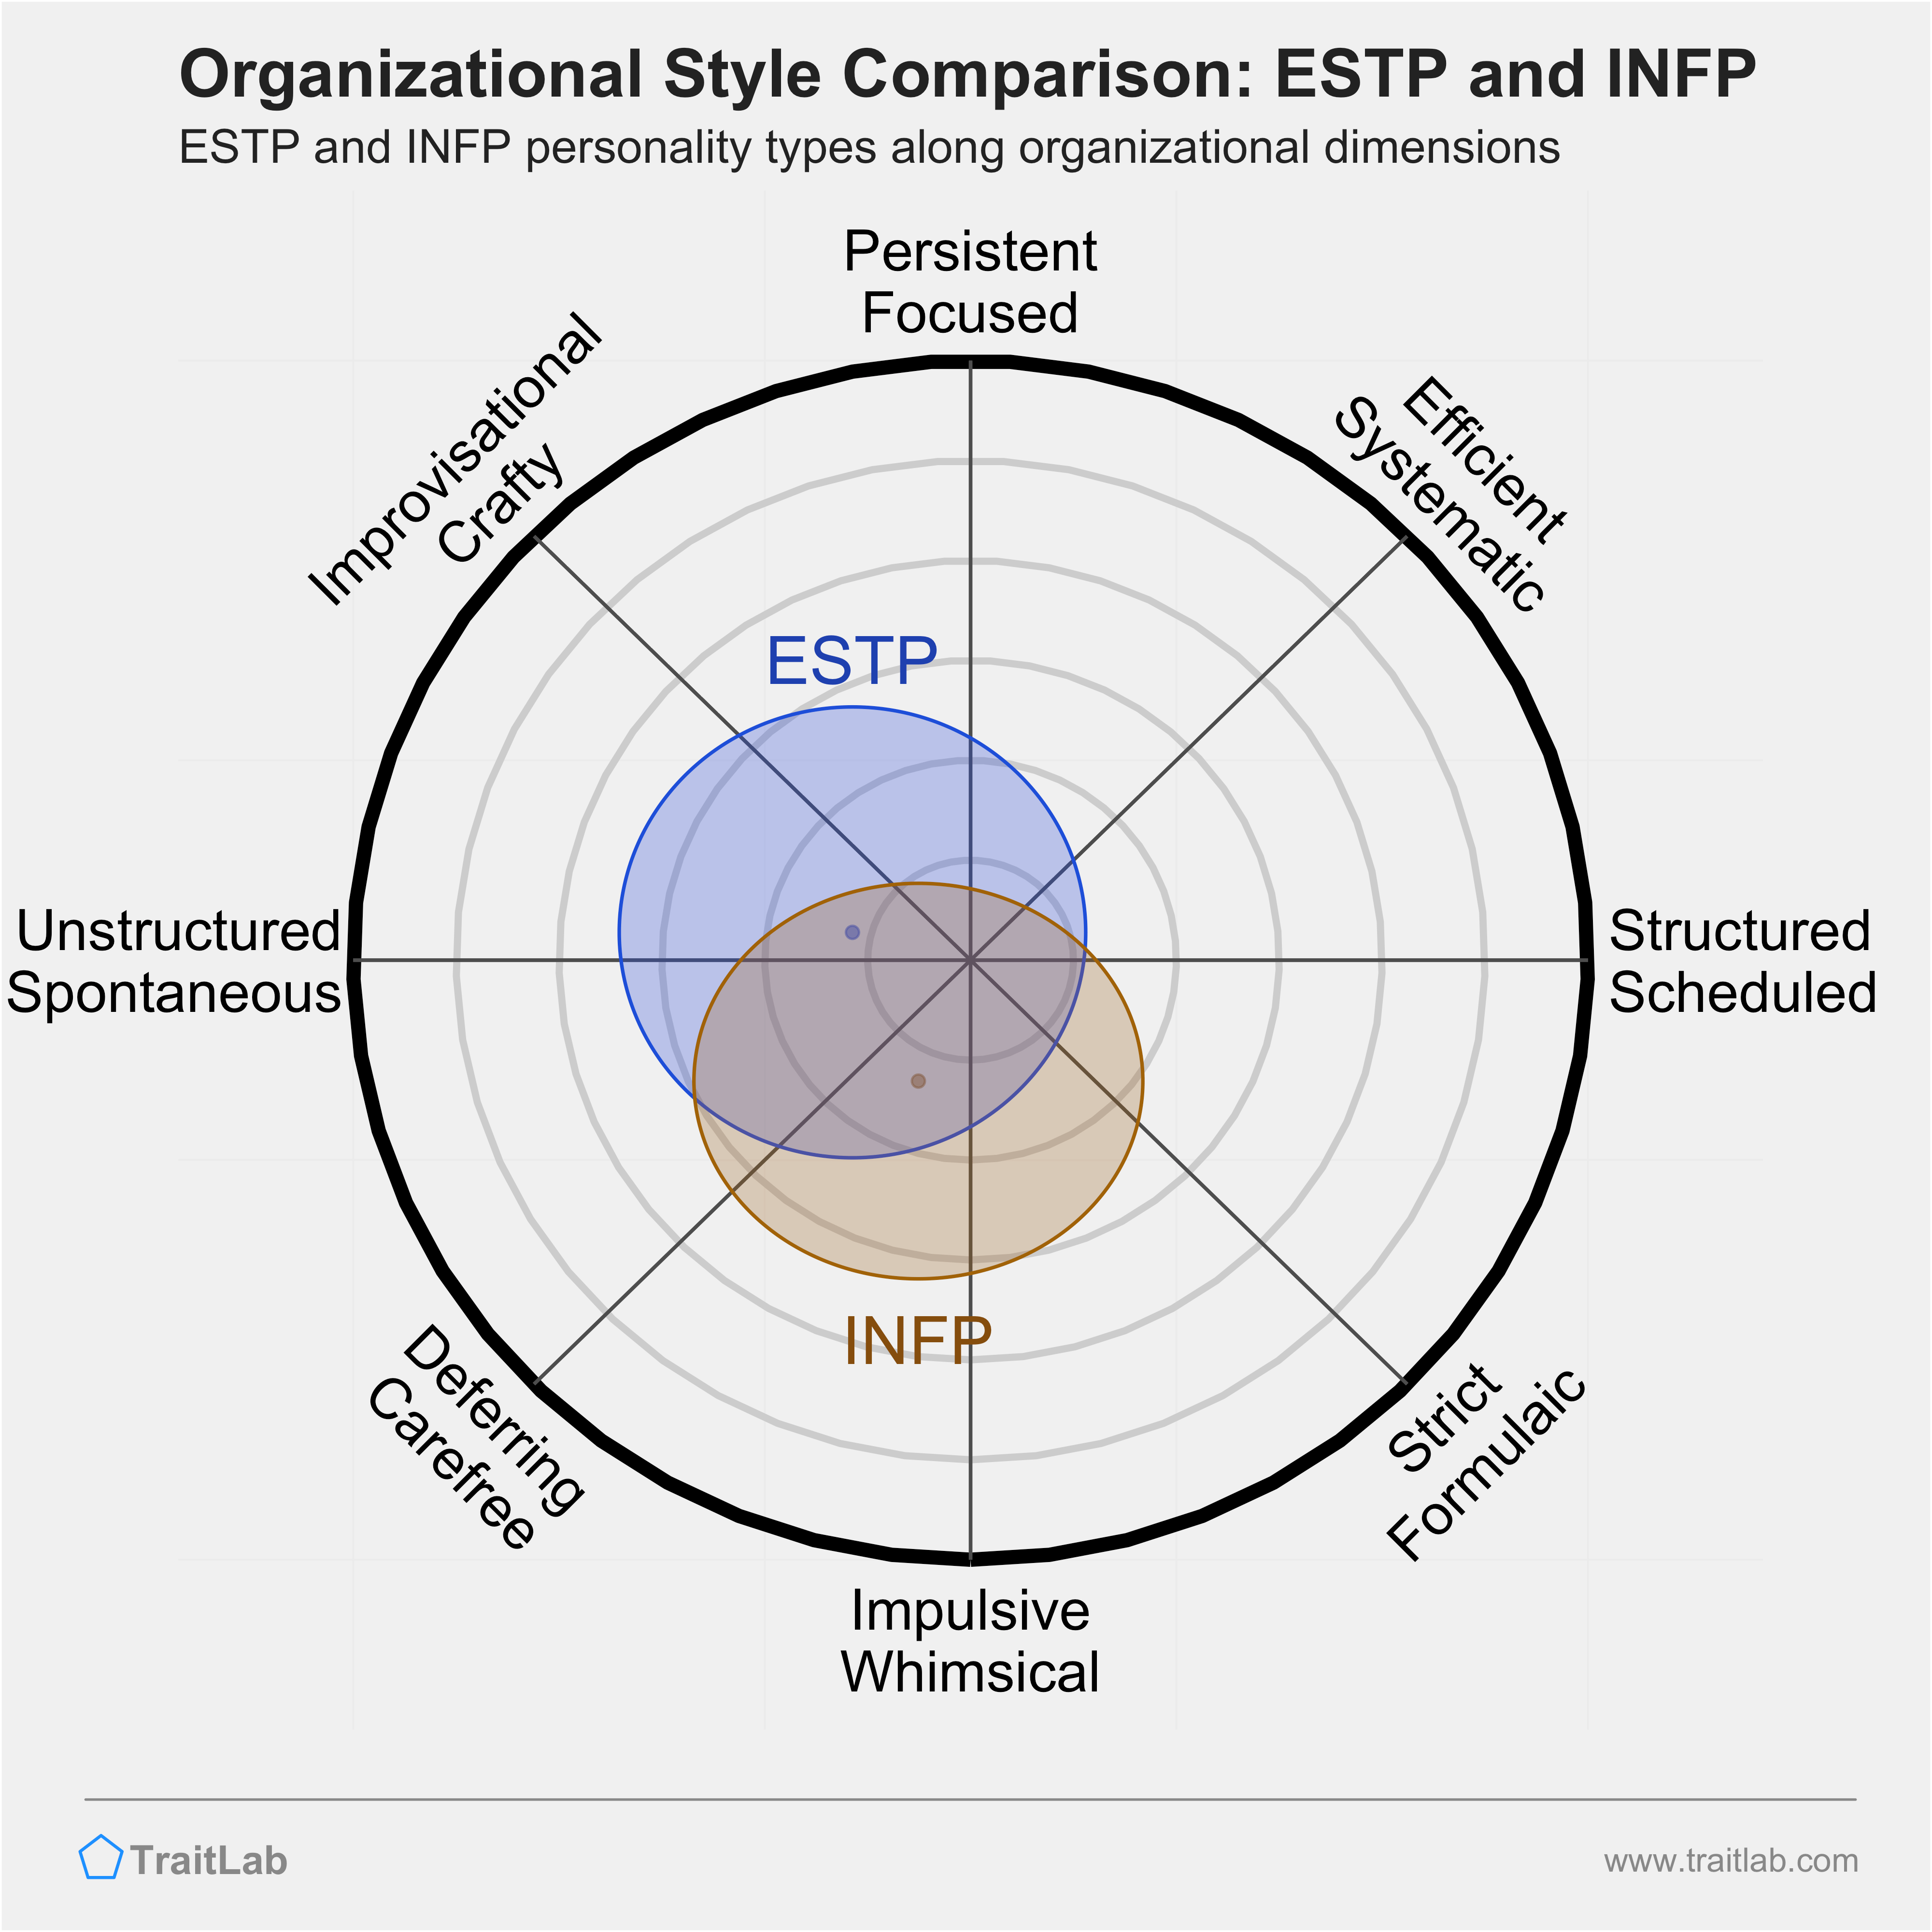 ESTP and INFP comparison across organizational dimensions